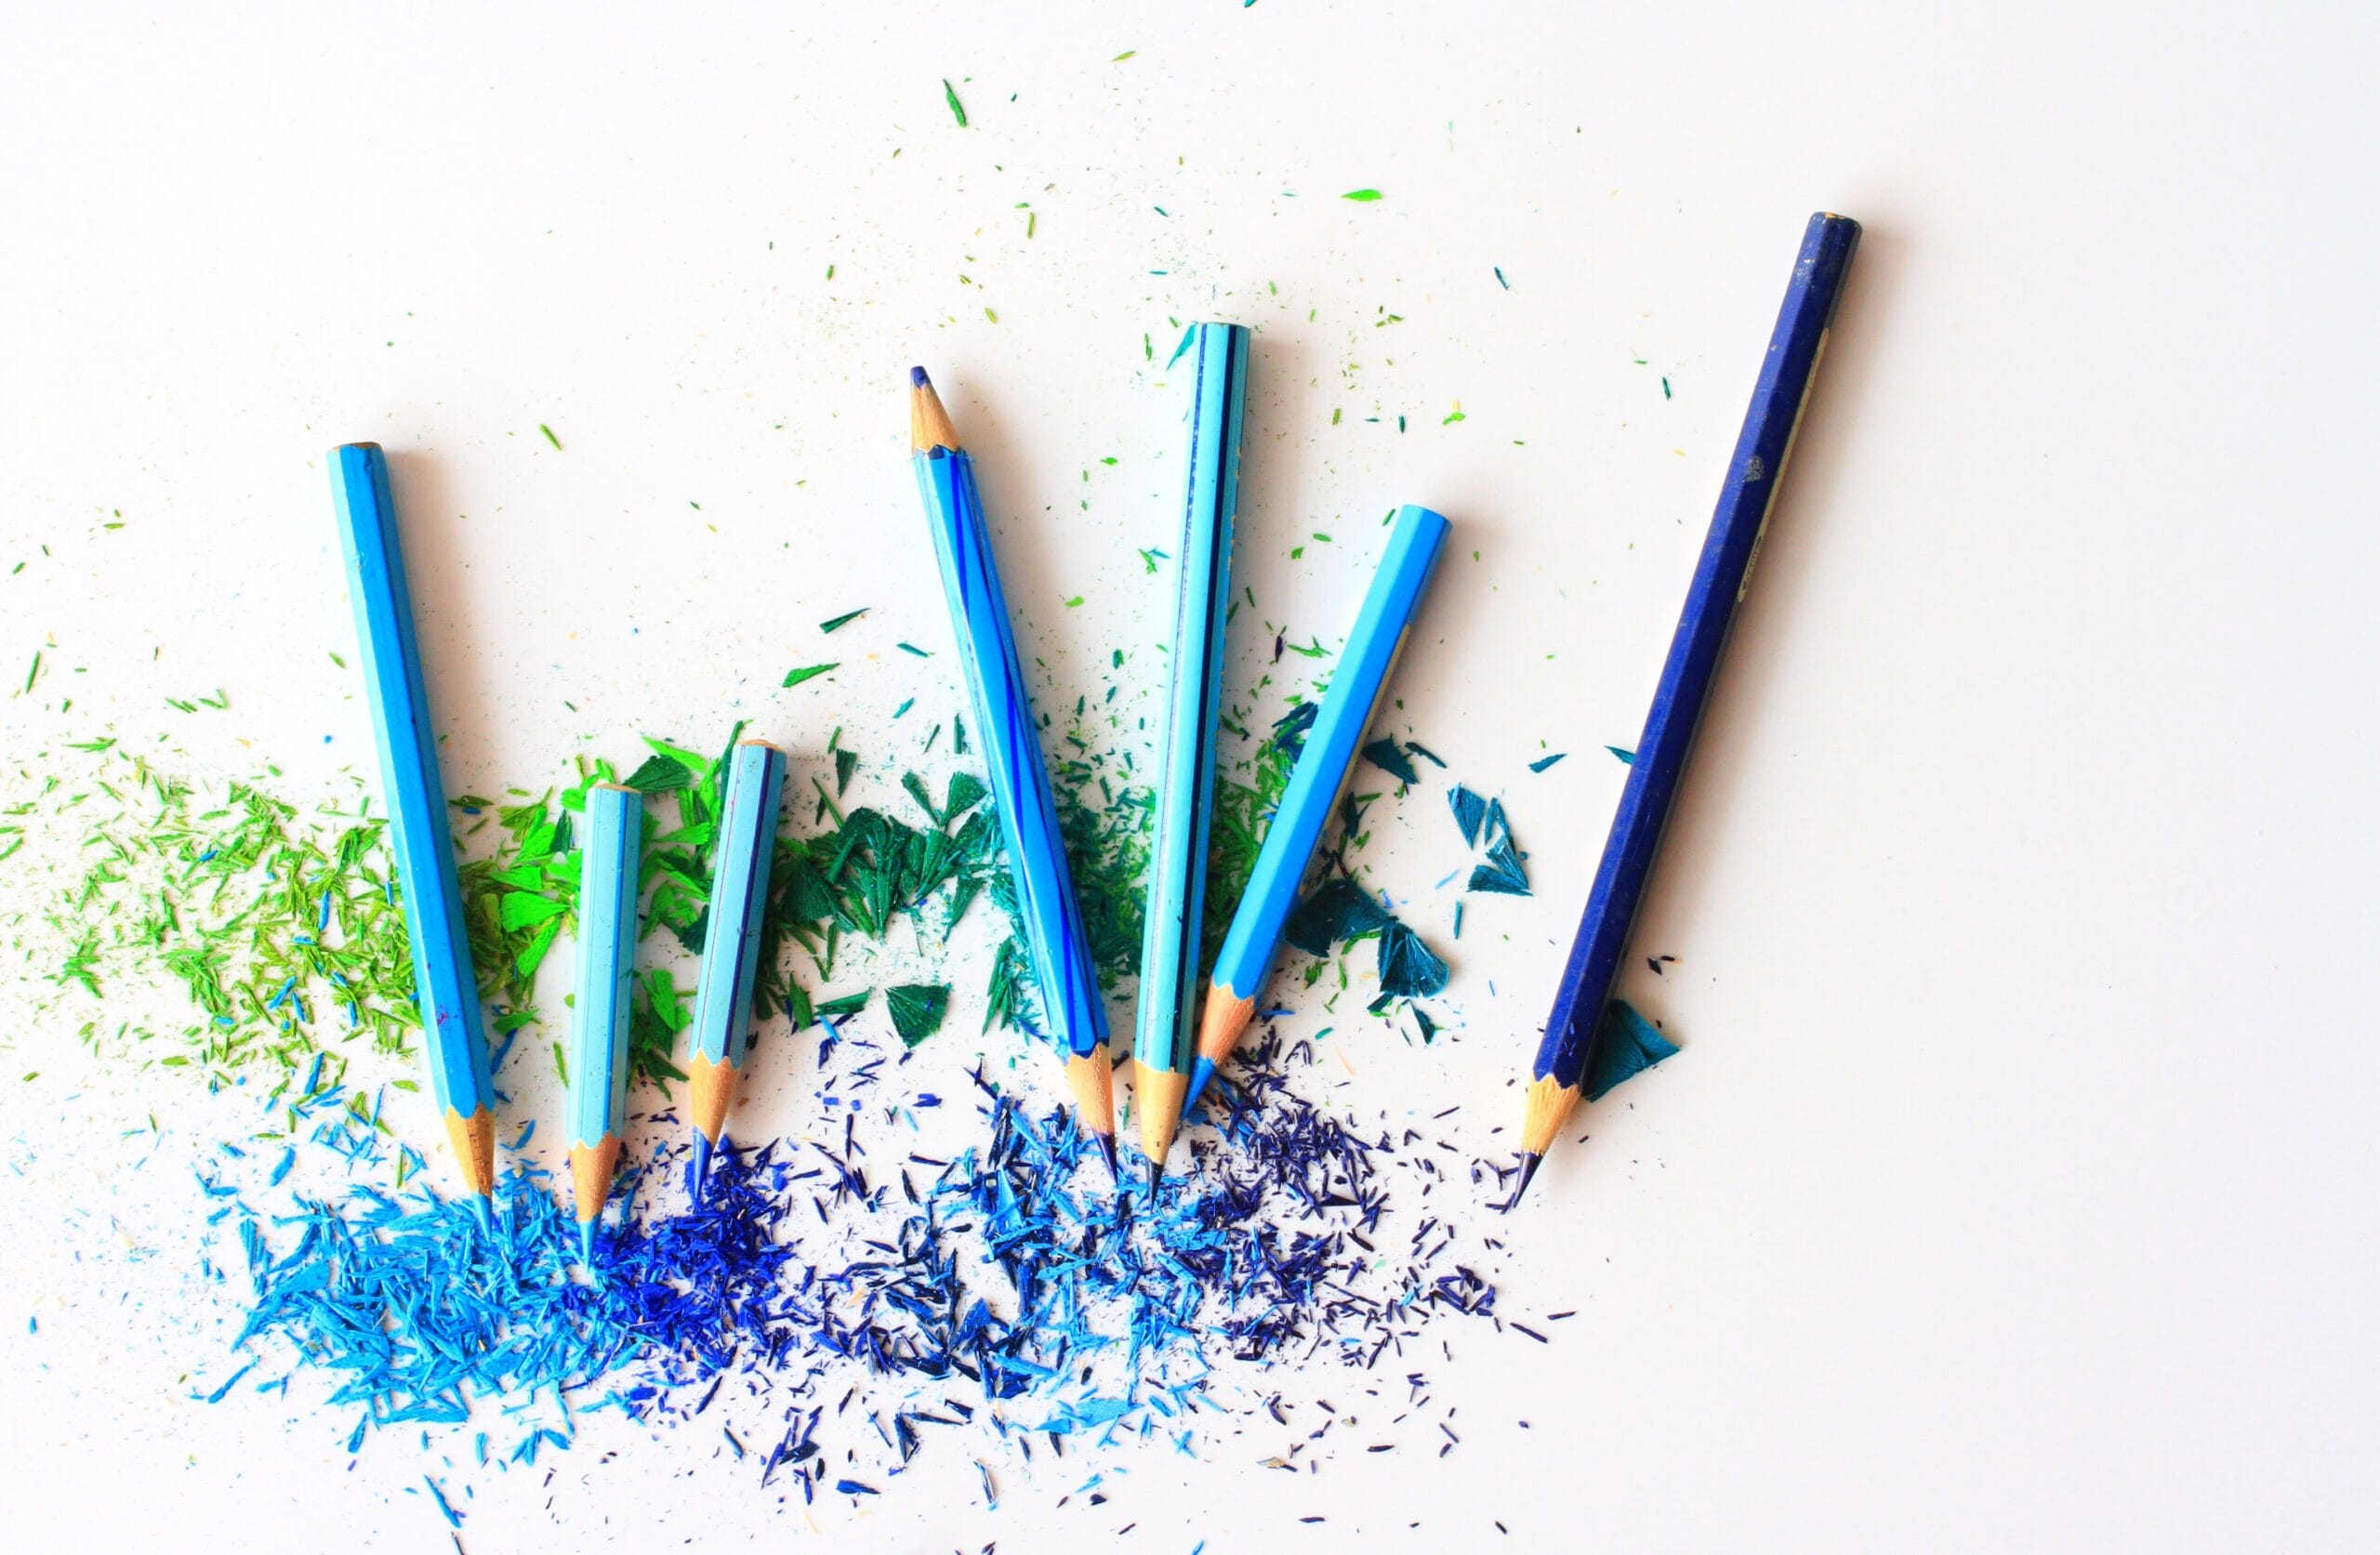 Blue and green pencil crayons and pencil crayon shavings.